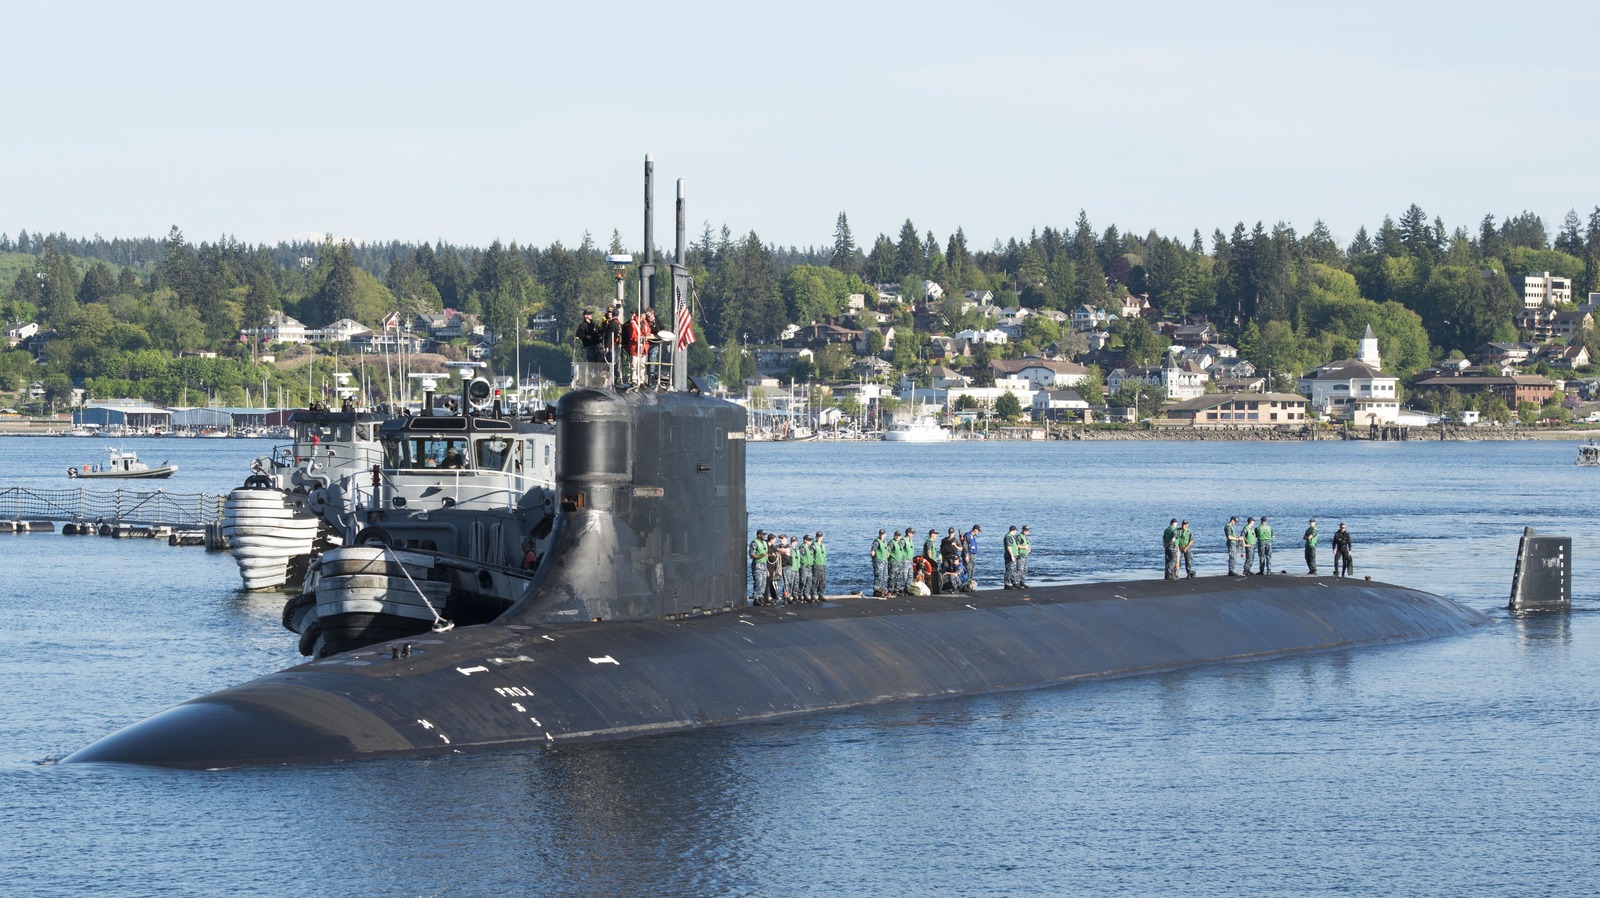 Uss Seawolf: The Highly Advanced Submarine That Changed Underwater Warfare